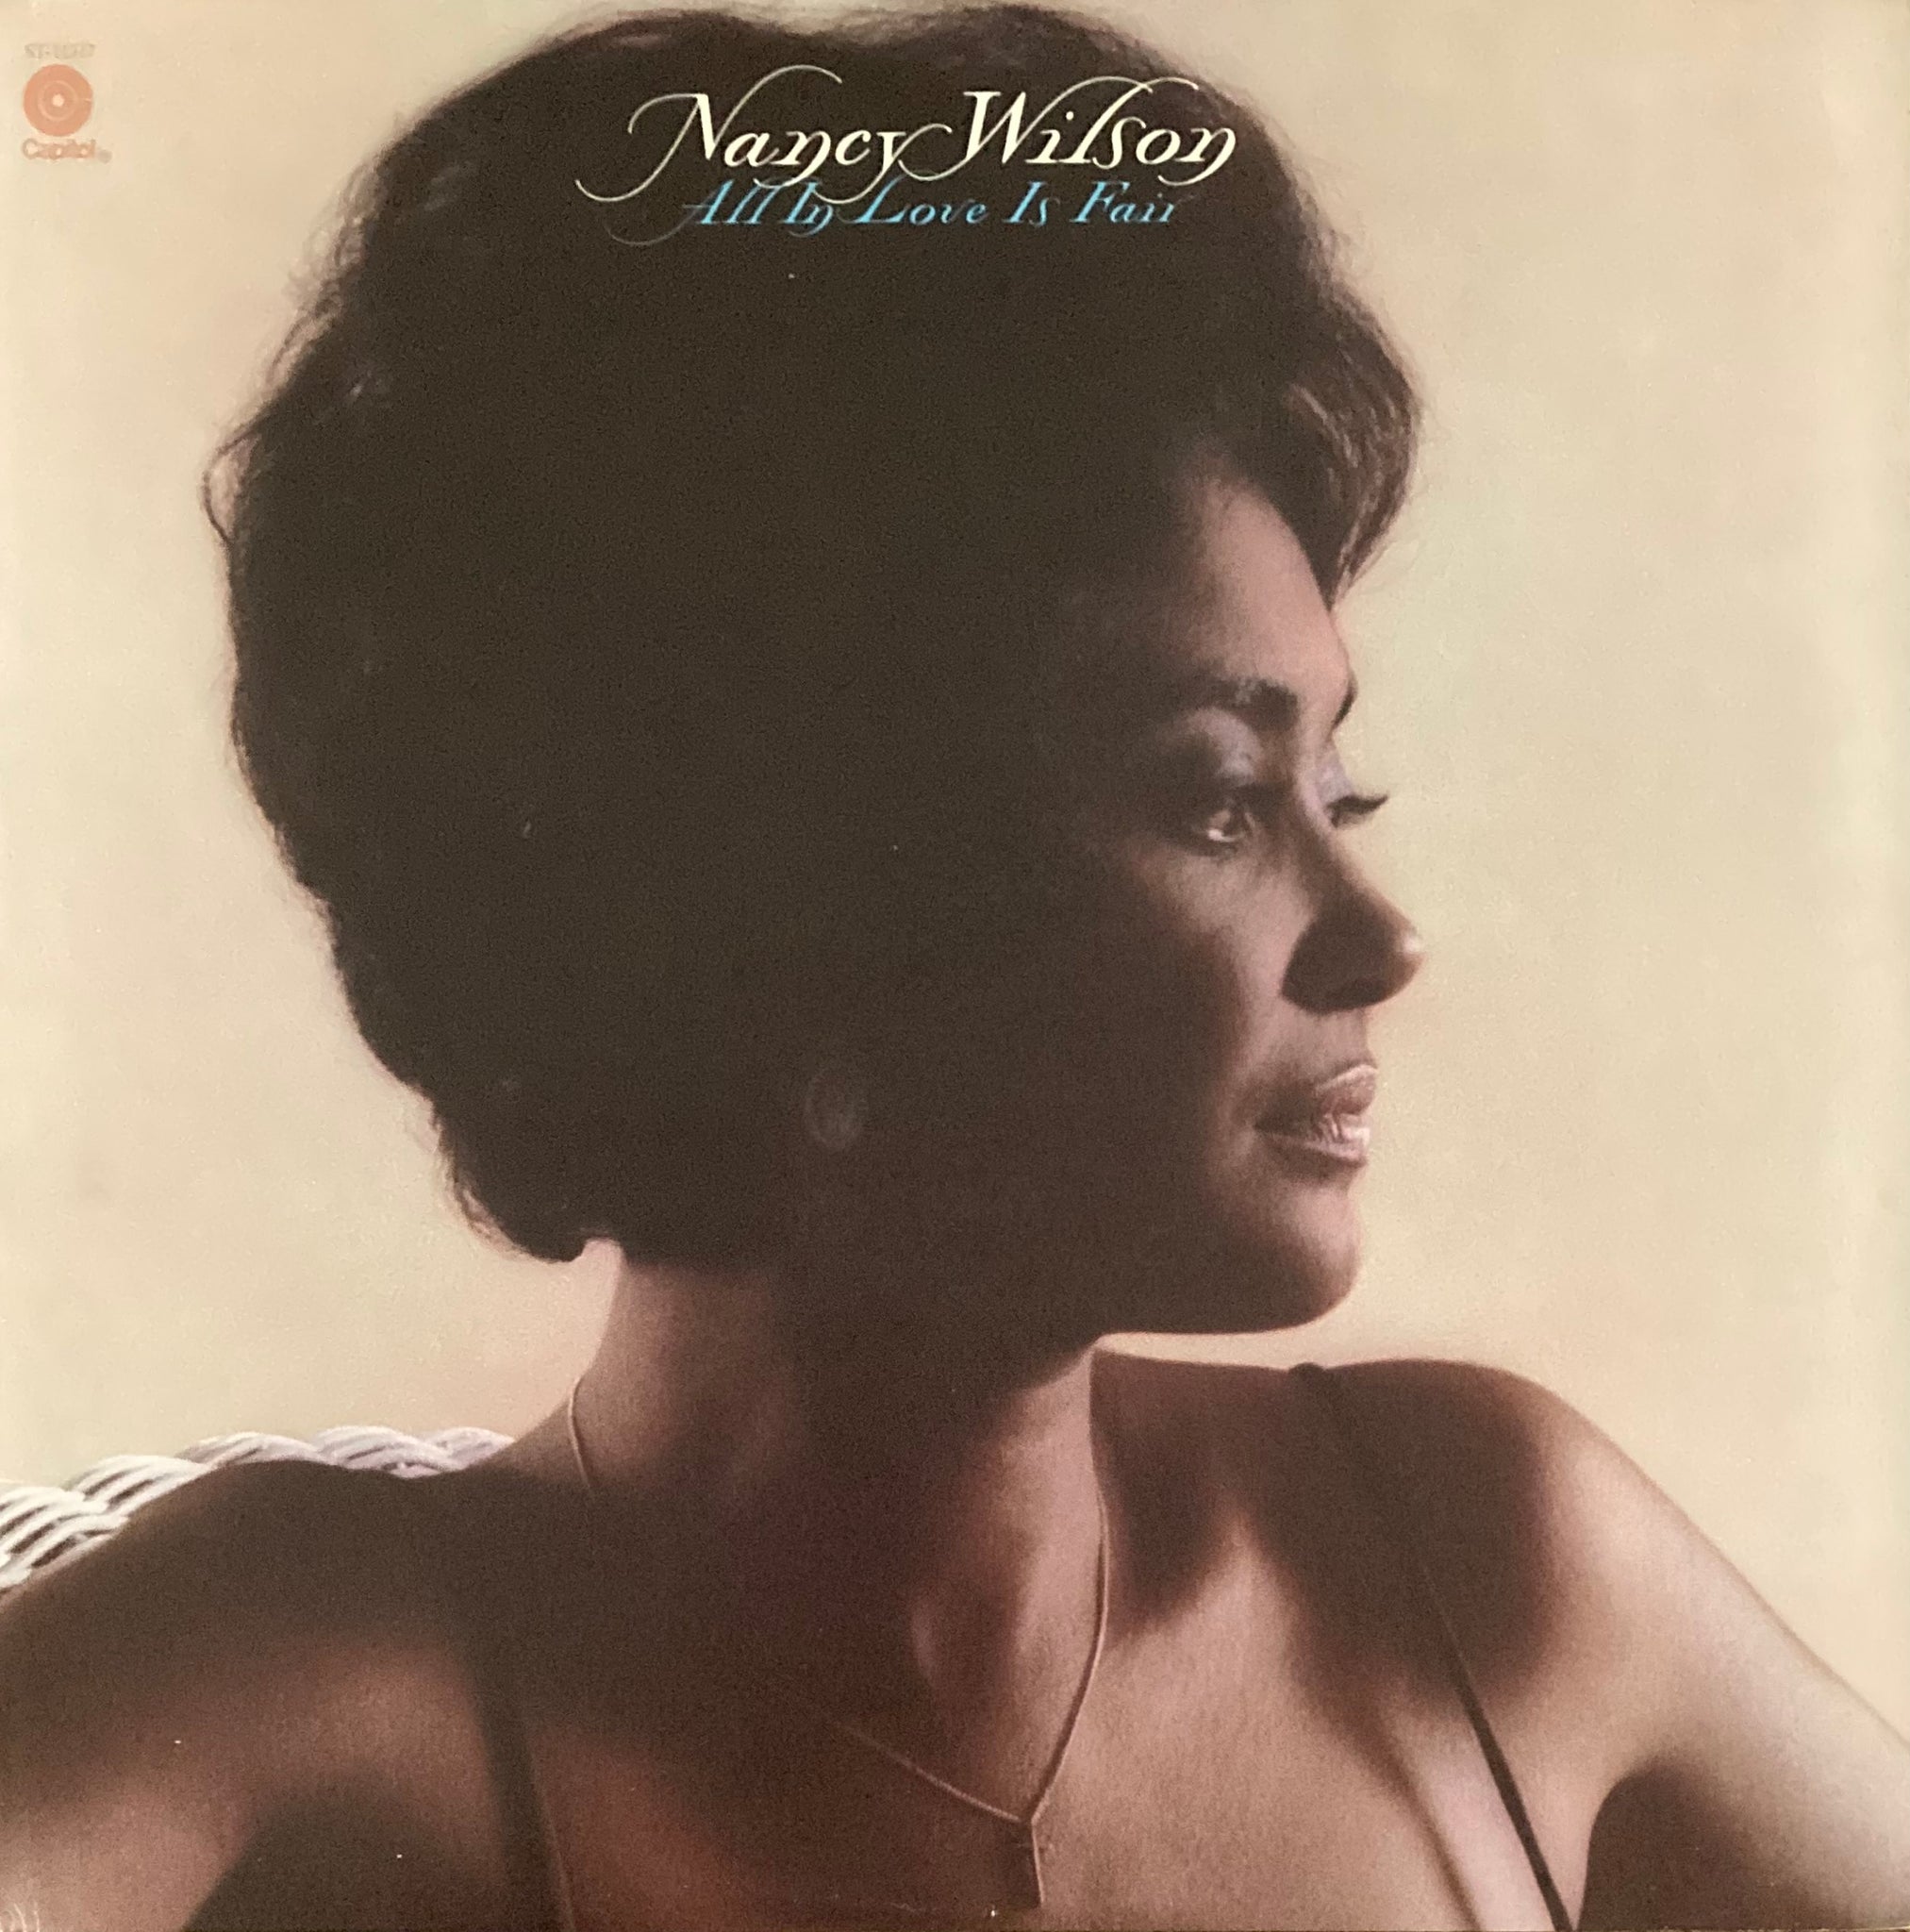 Nancy Wilson “All In Love Is Fair” LP (1974)